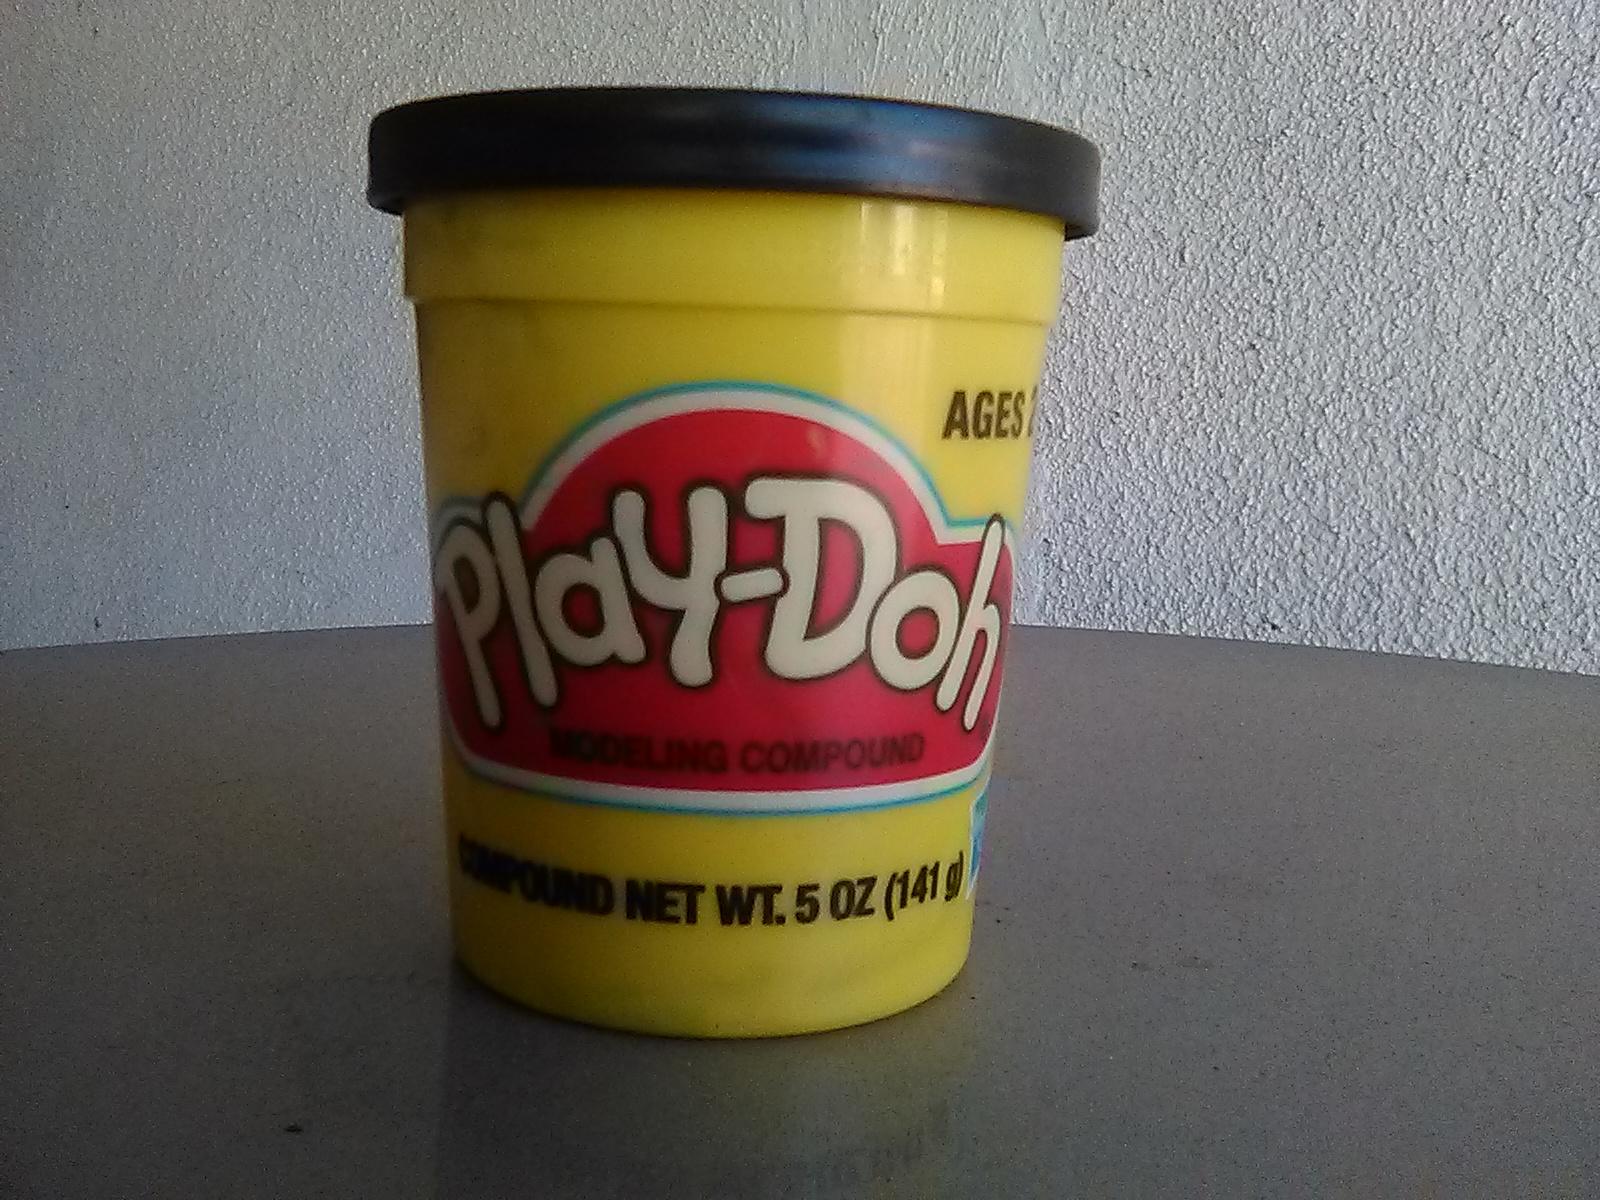  Gallery - Tip: black Play Doh is good to plug